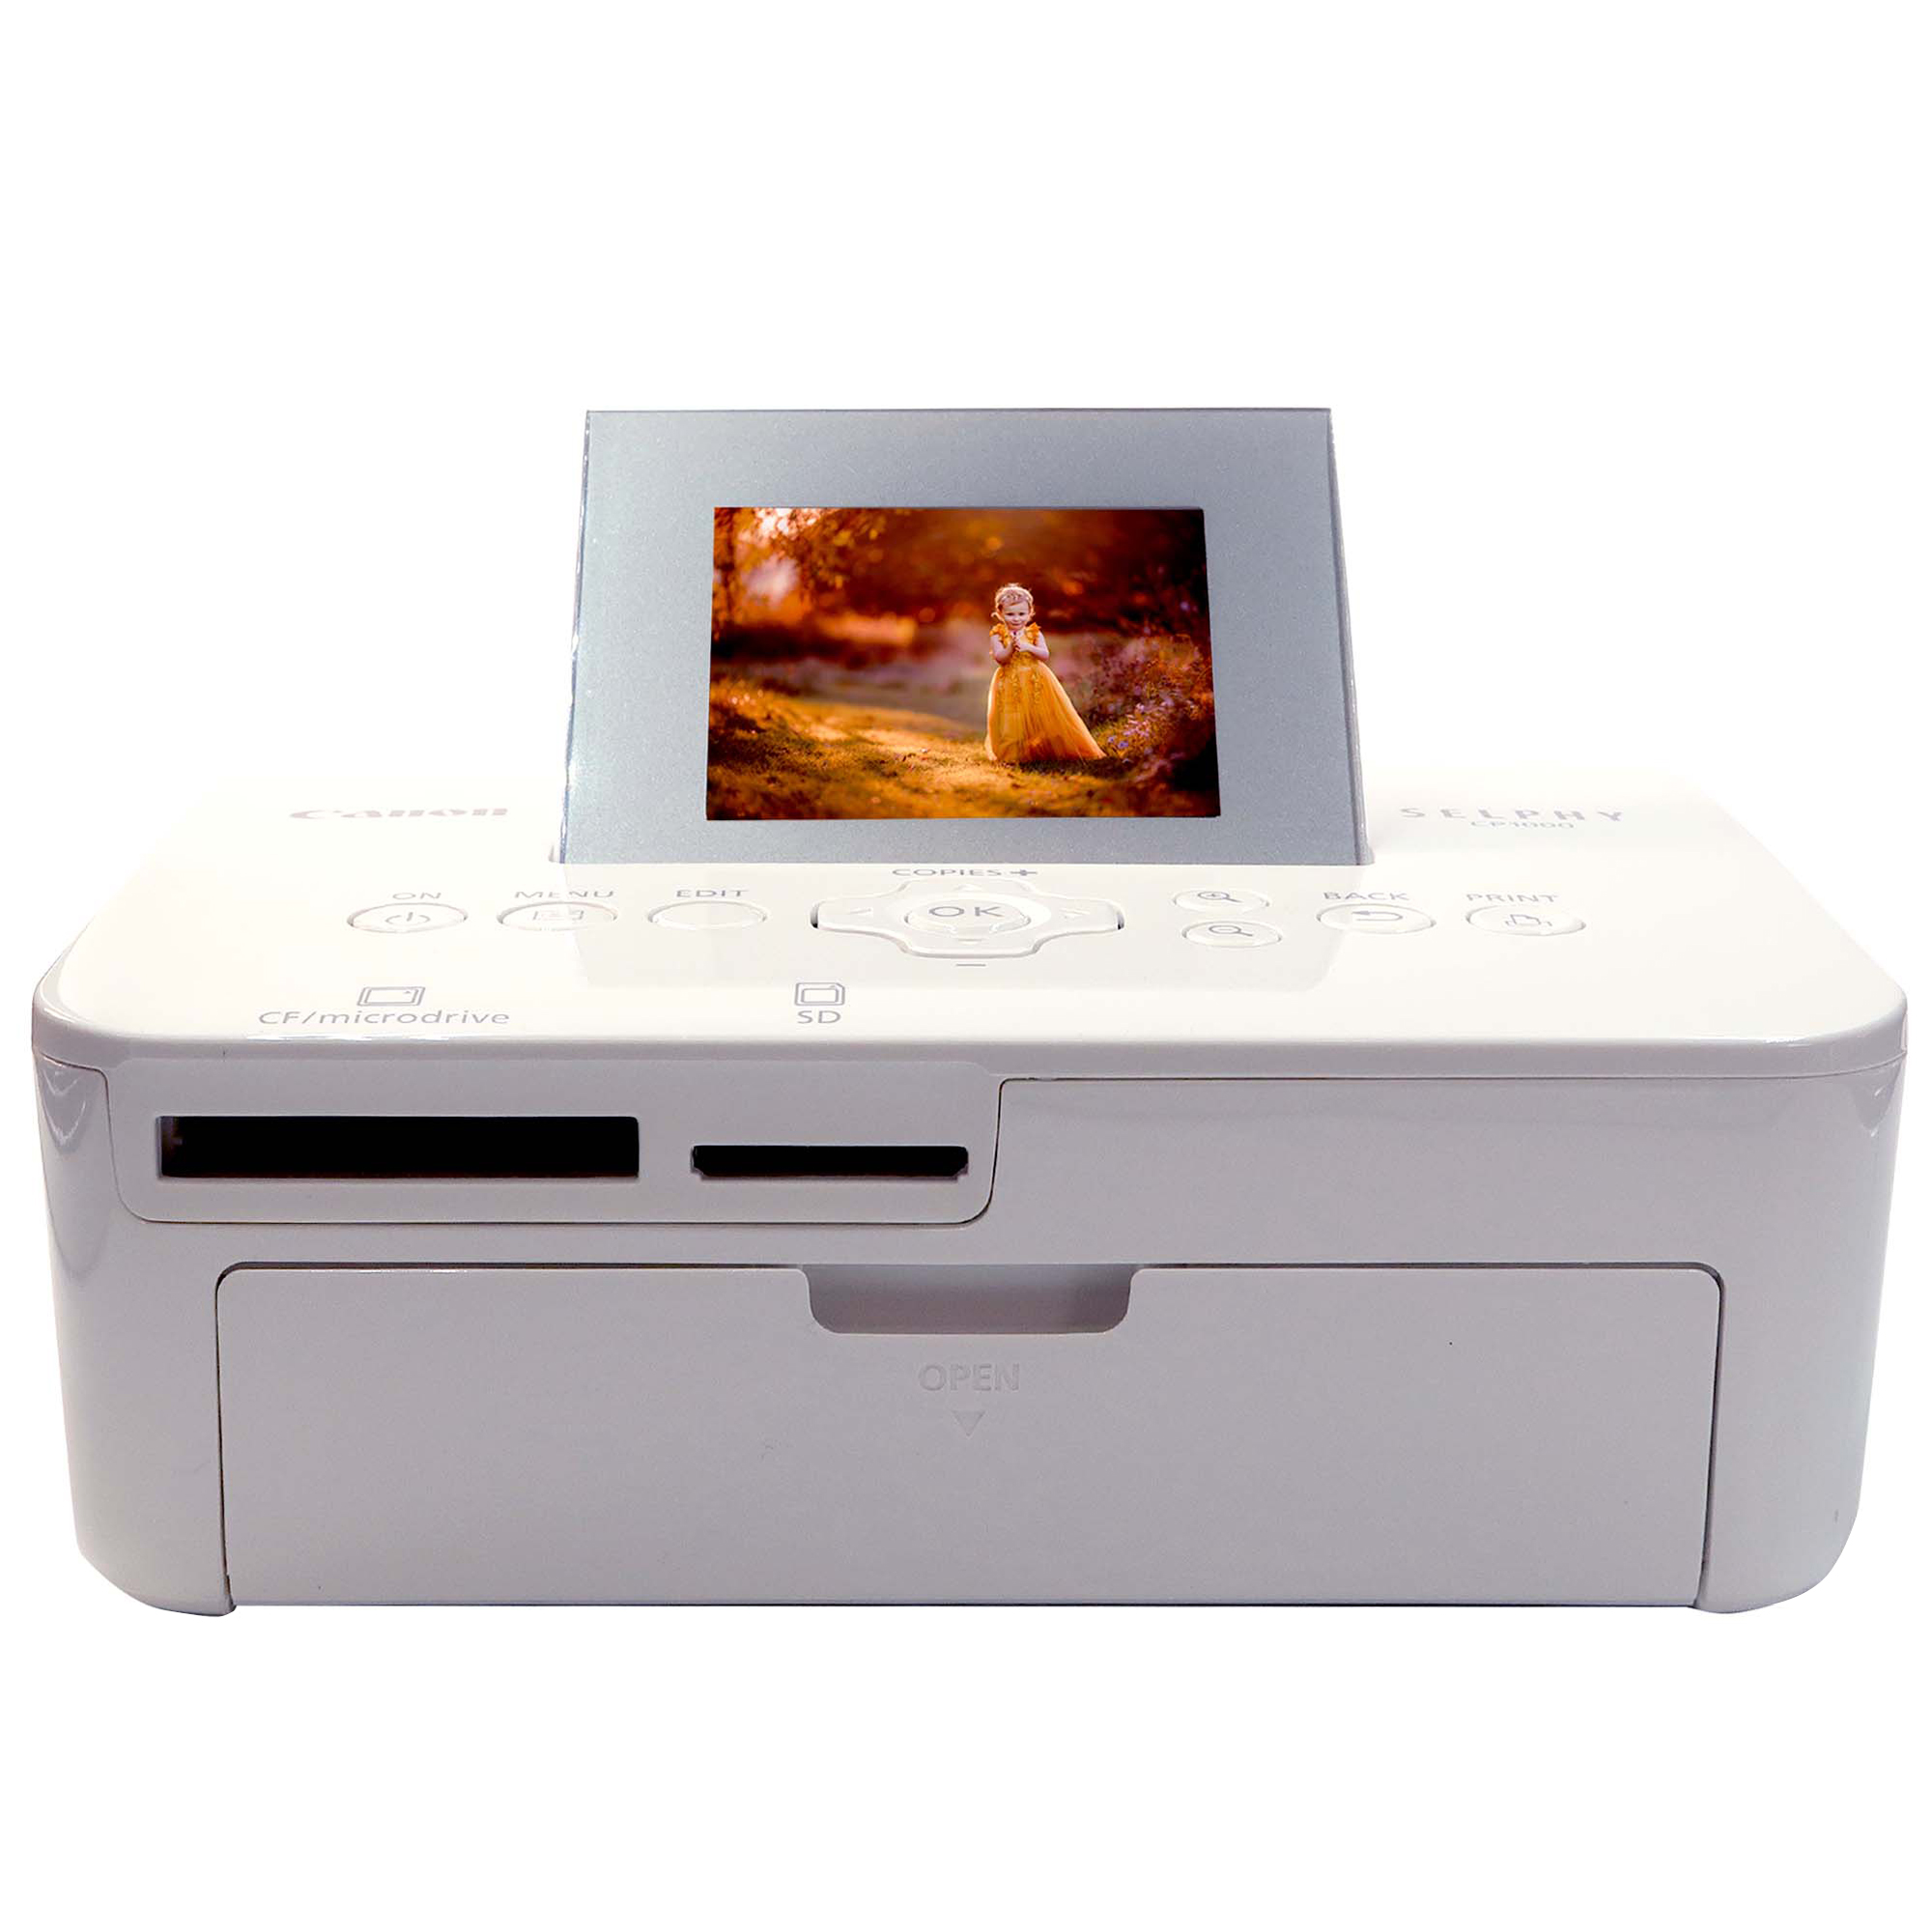 Canon Selphy CP1000 Photo Printer - Black/White Buy, Best Price in